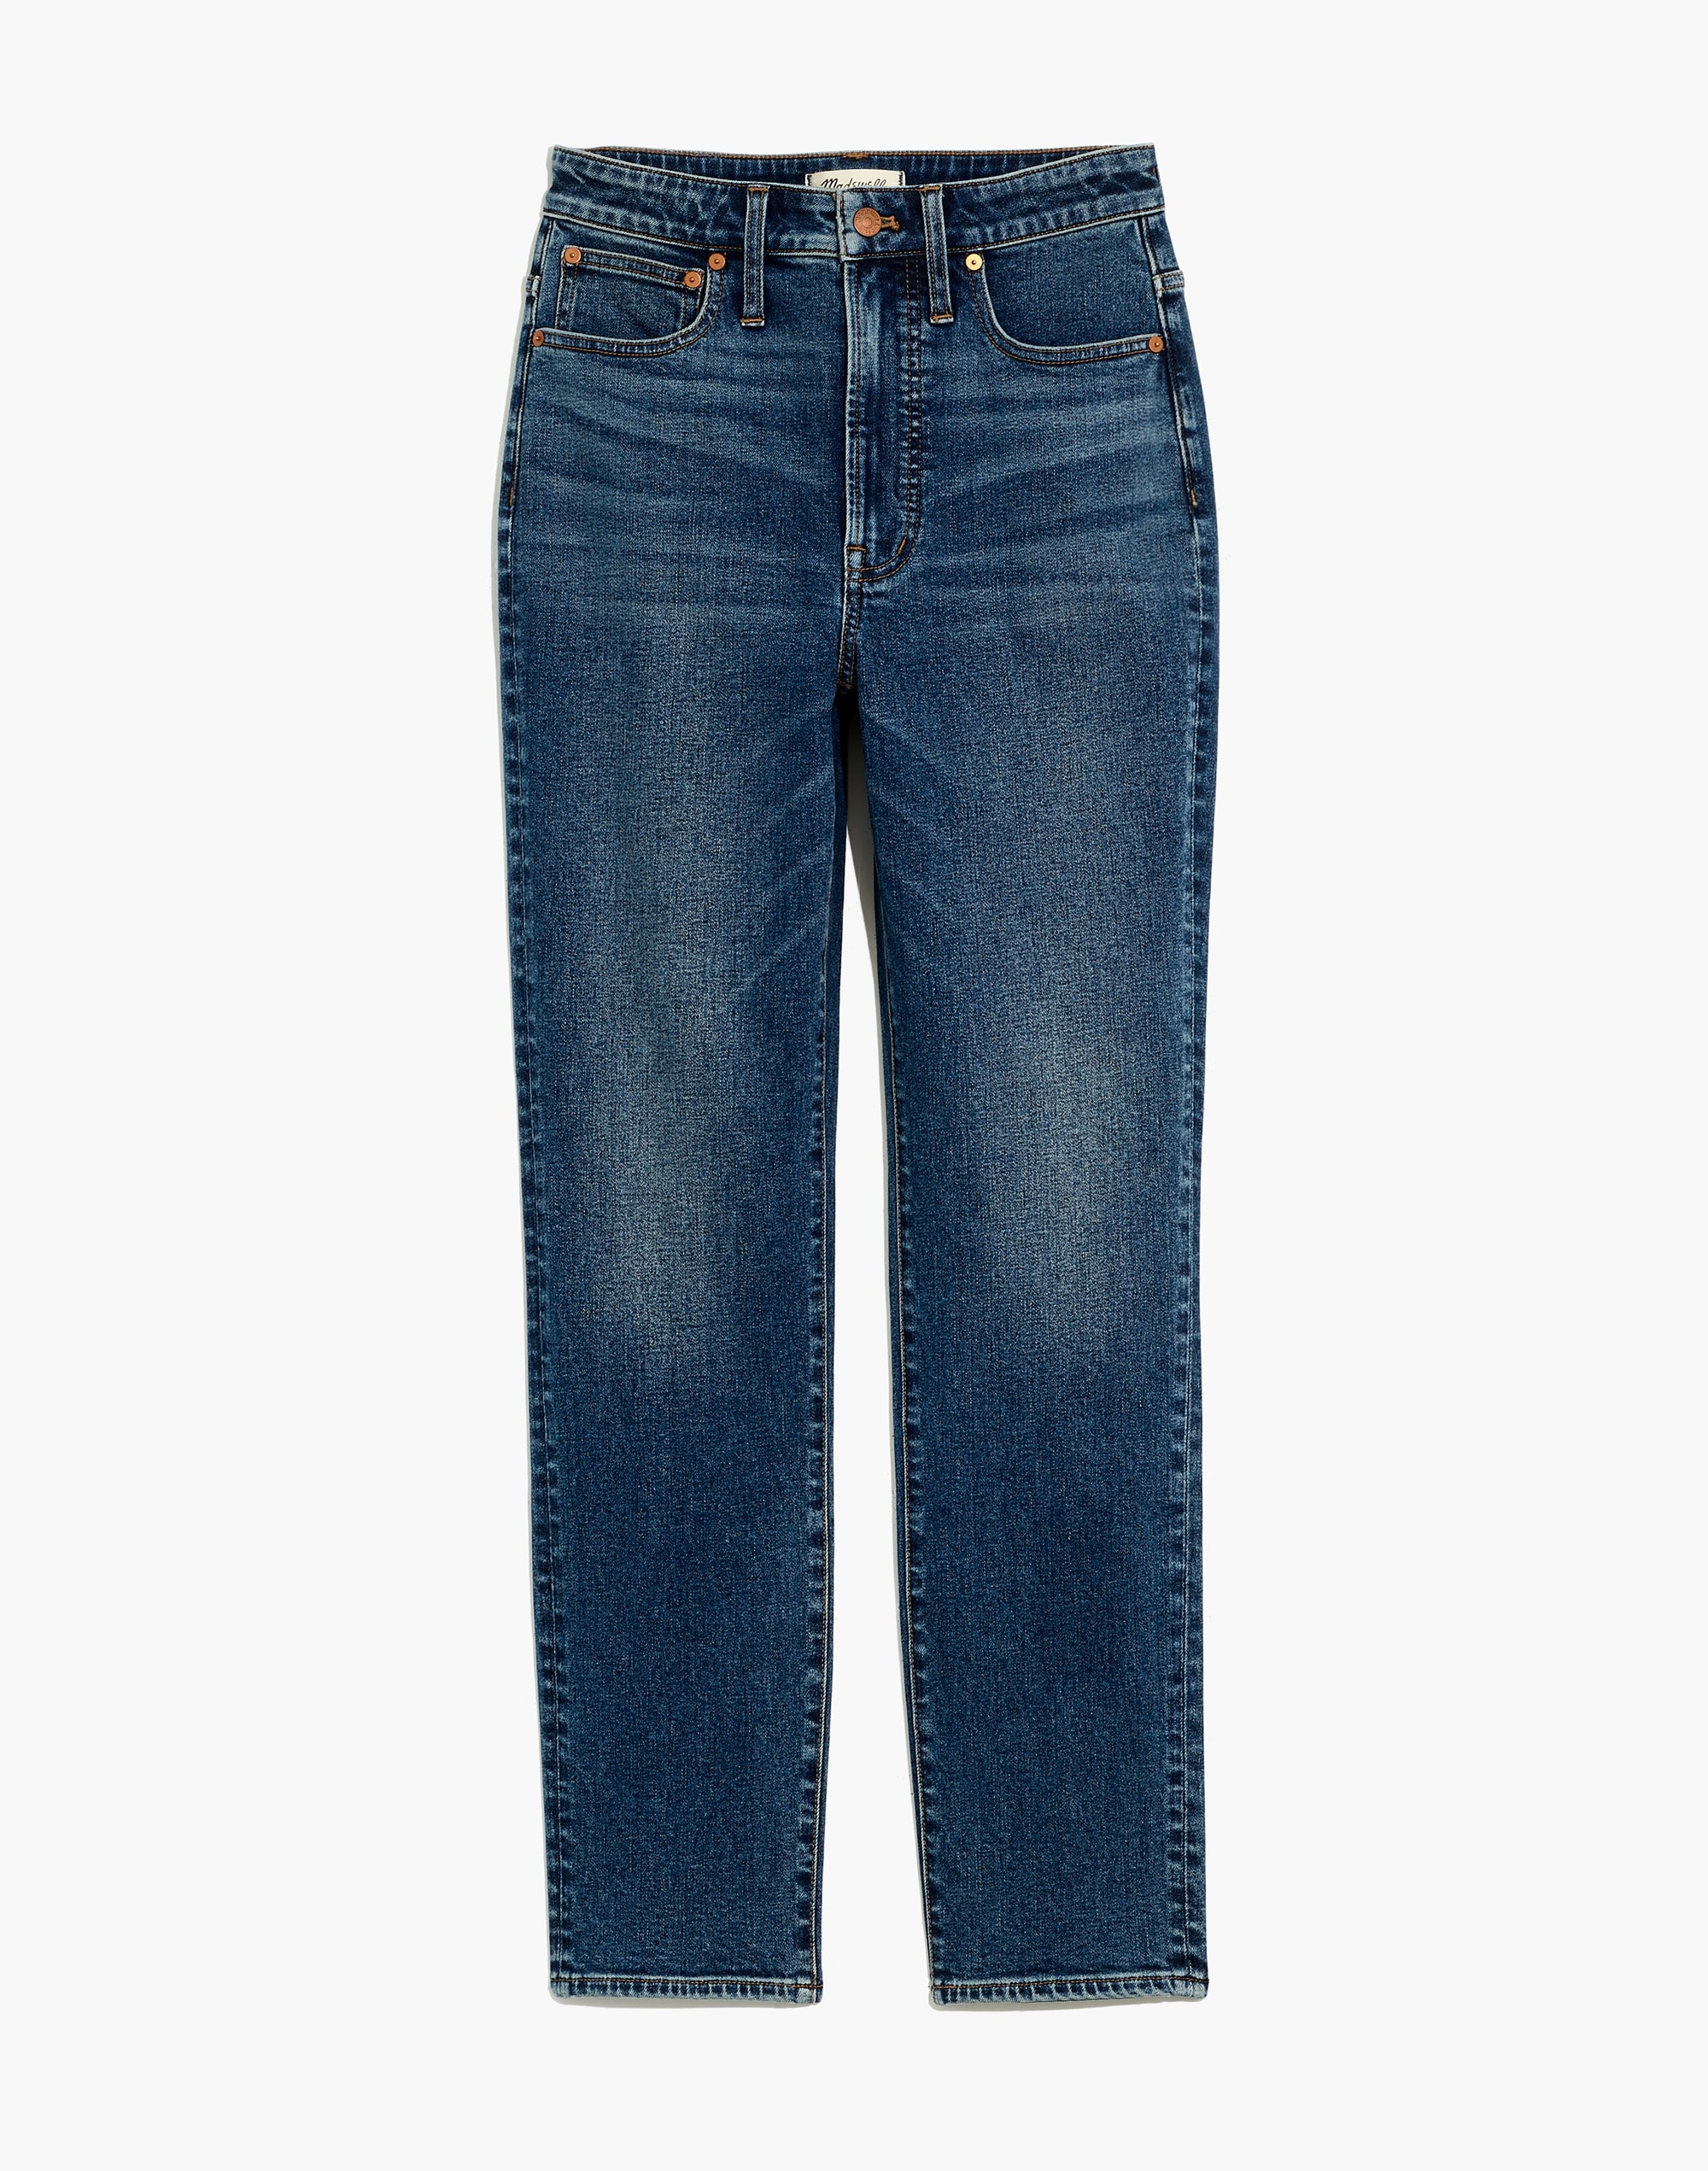 The Curvy Perfect Vintage Jean in Arland Wash: Instacozy Edition